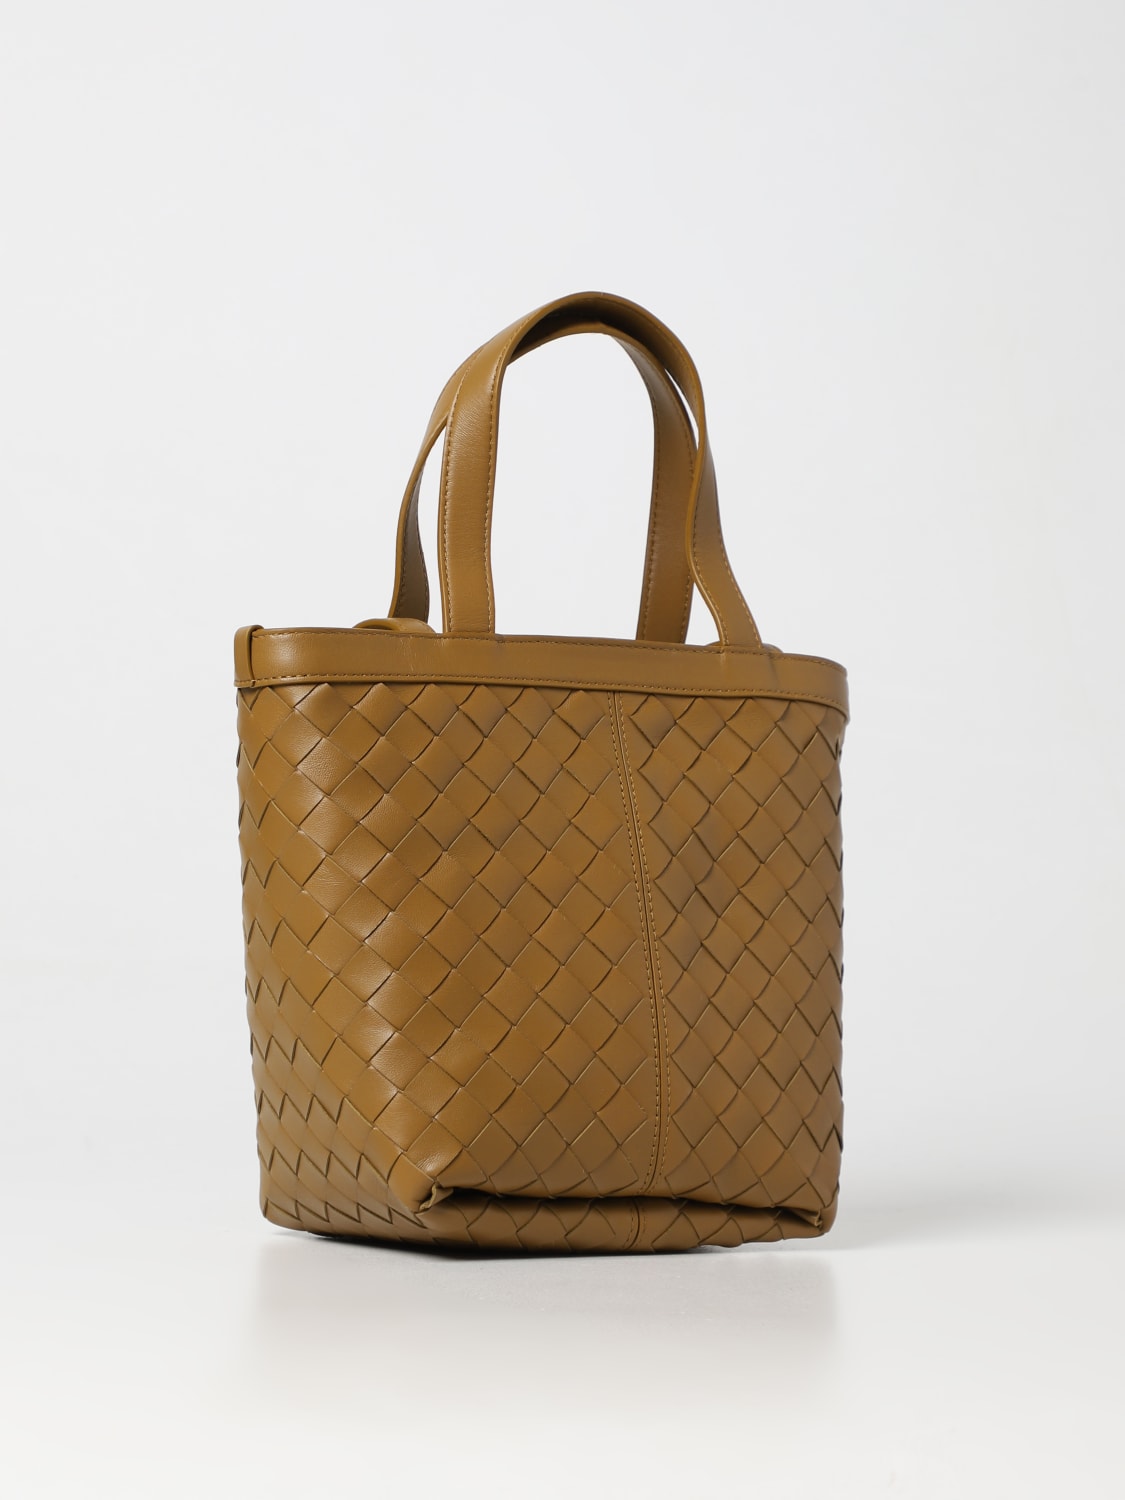 BOTTEGA VENETA: handbag for woman - Camel | Bottega Veneta handbag ...